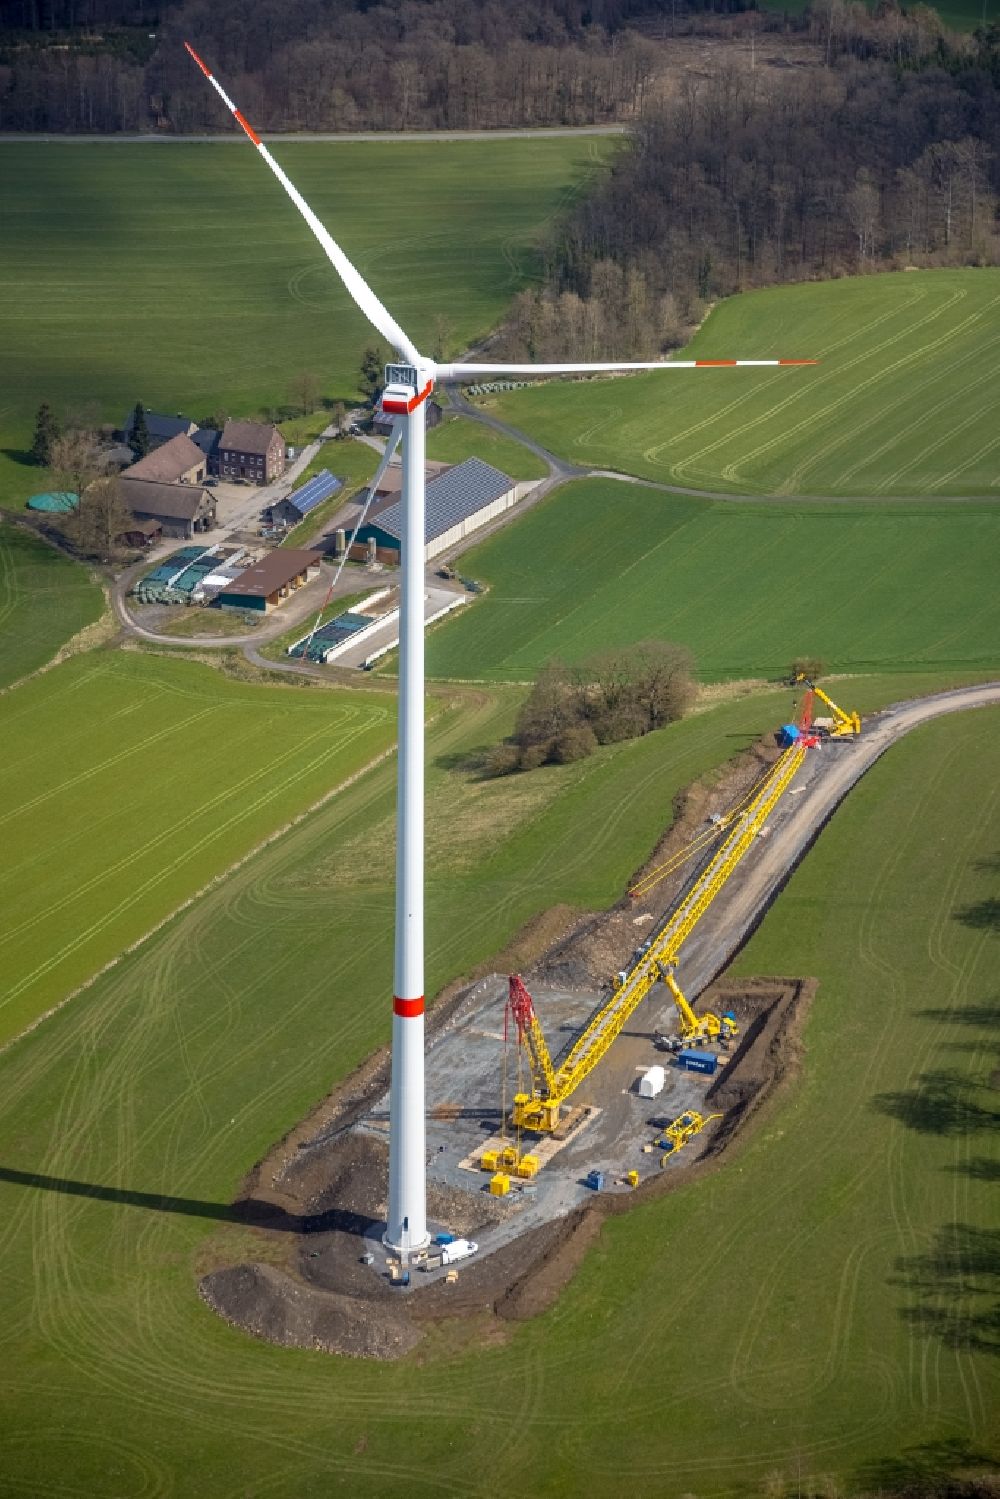 Sundern (Sauerland) from the bird's eye view: Construction site for wind turbine installation in the district Hoevel in Sundern (Sauerland) in the state North Rhine-Westphalia, Germany